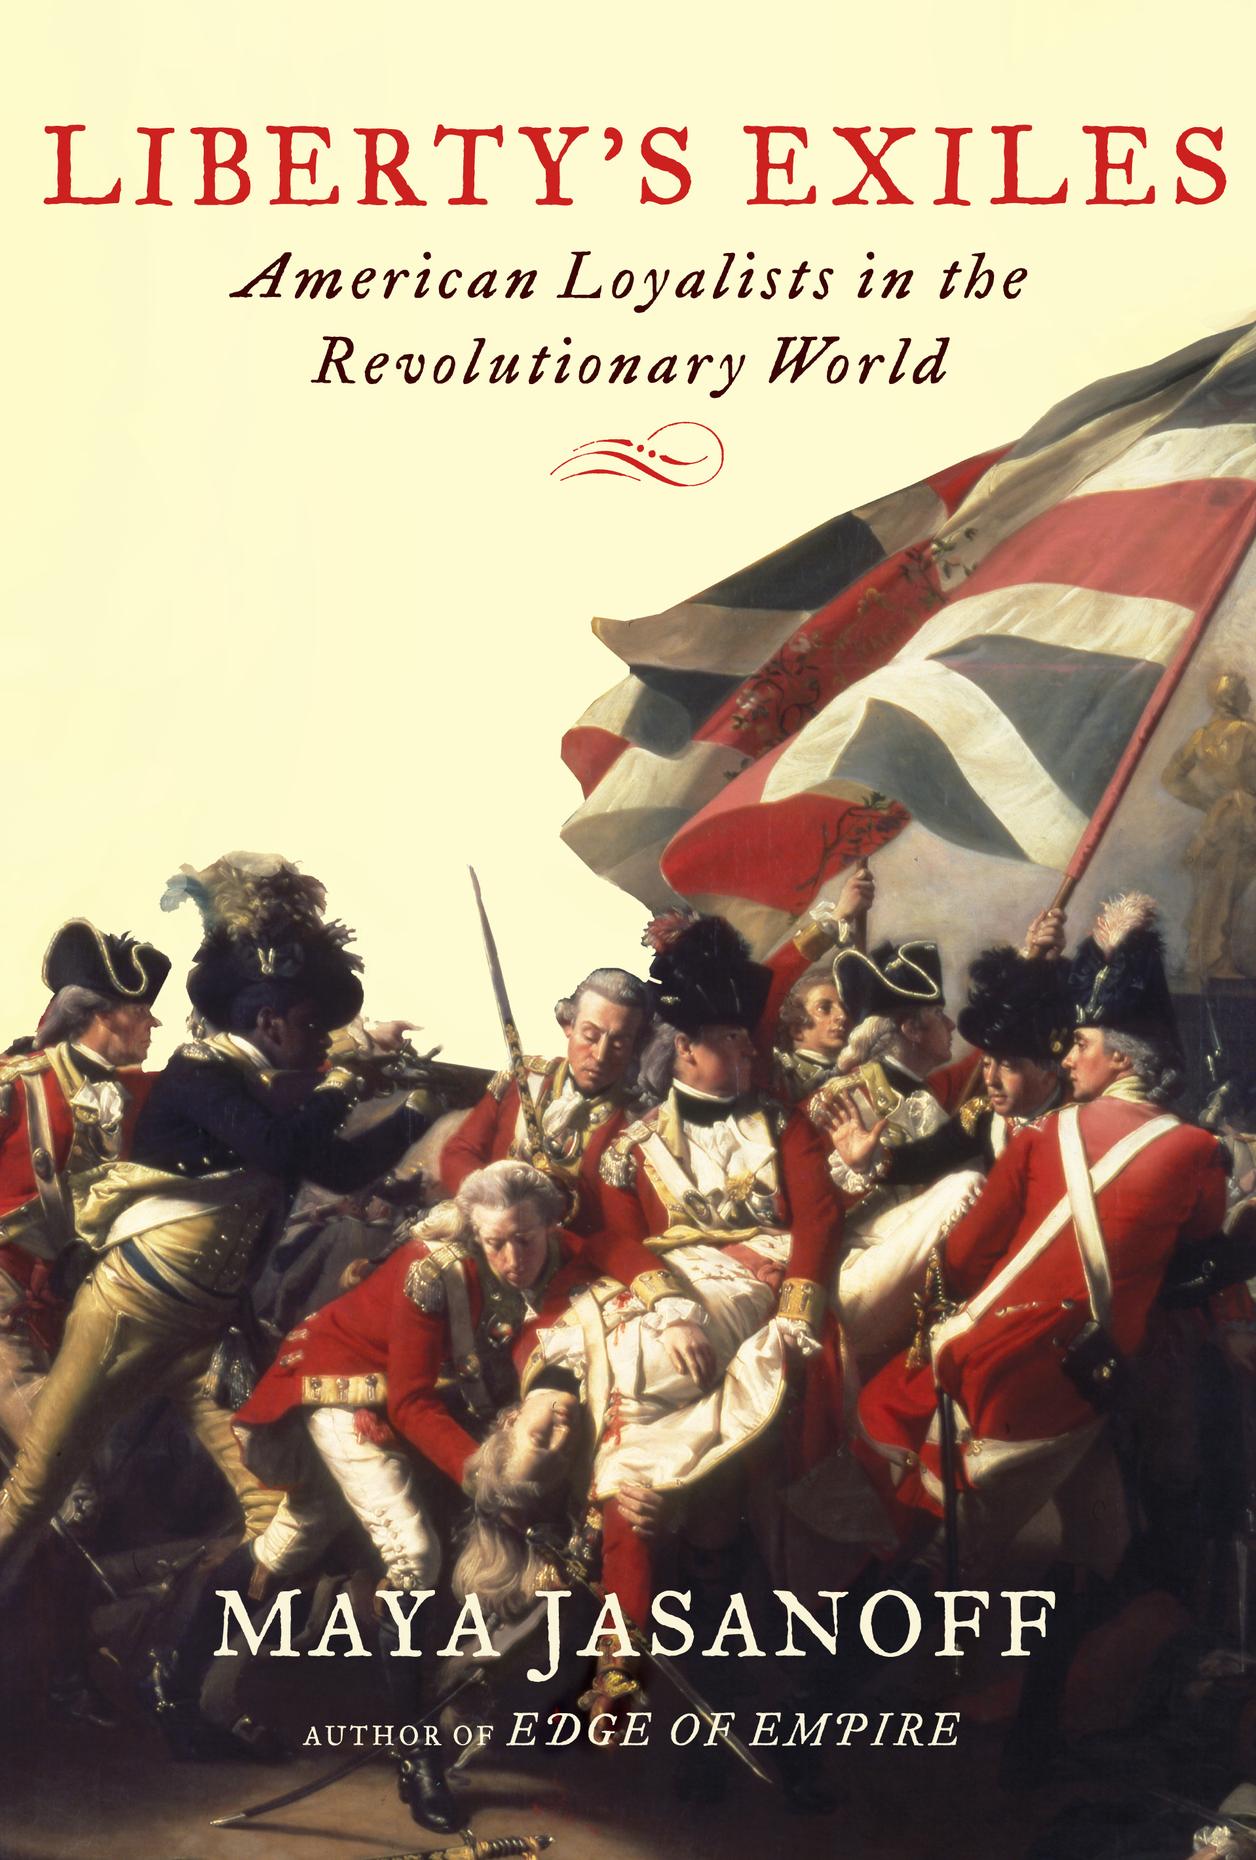 World of revolution. Maya Jasanoff. Американский учебник по истории. American Revolution Loyalists. American History учебник.